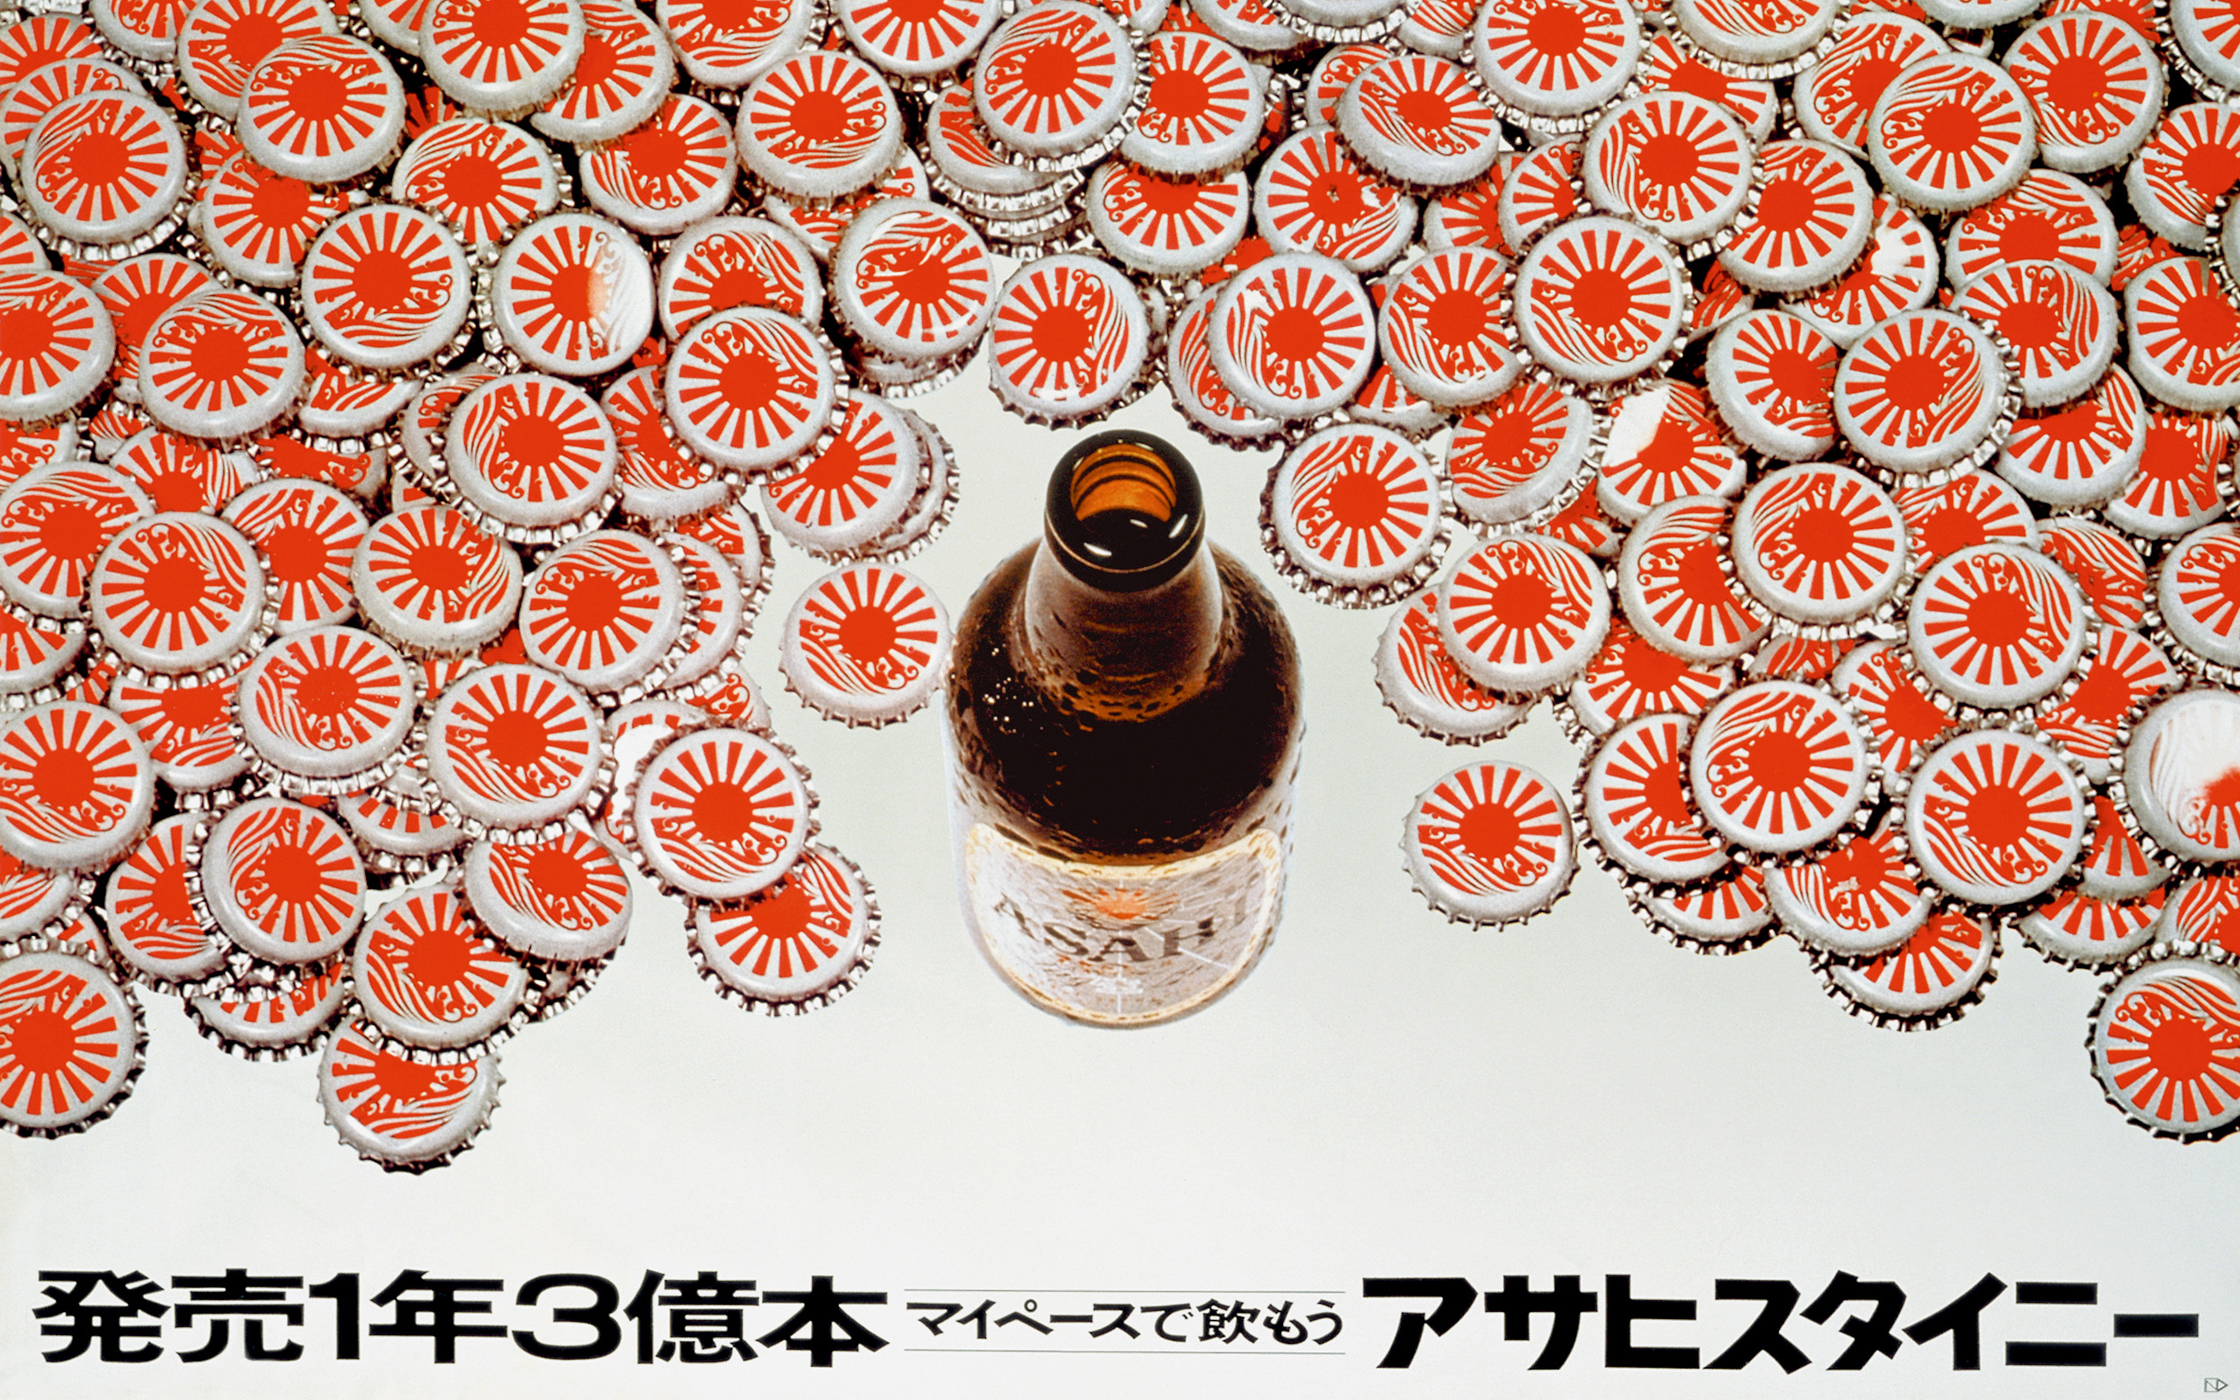 Asahi Beer “Asahi Steiny”